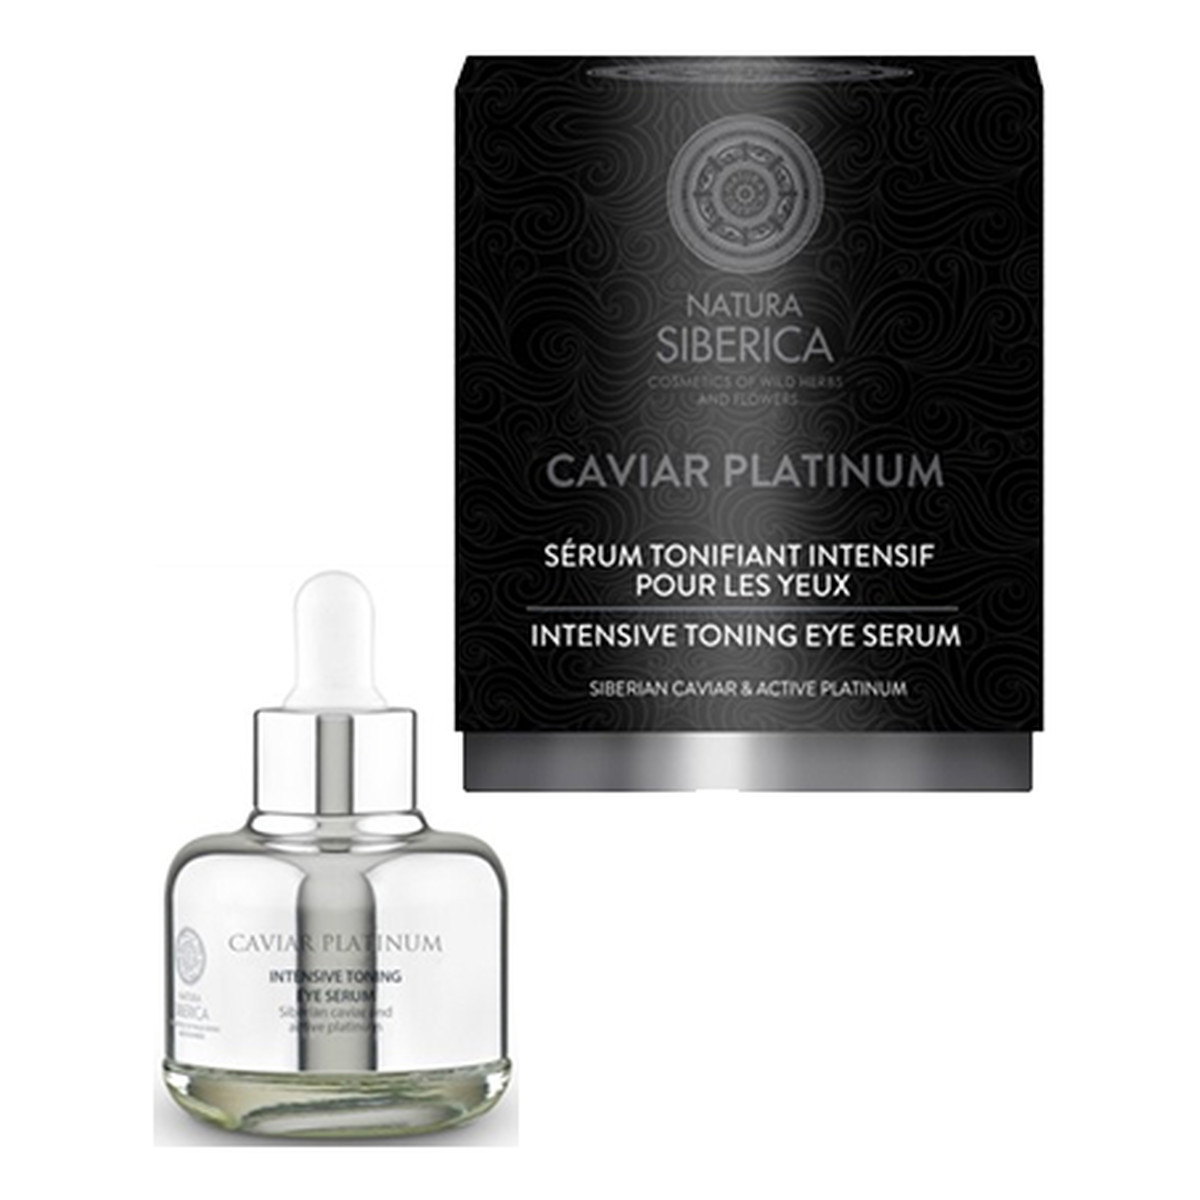 Natura Siberica caviar platinum Intensywnie tonizujące serum do oczu 30ml